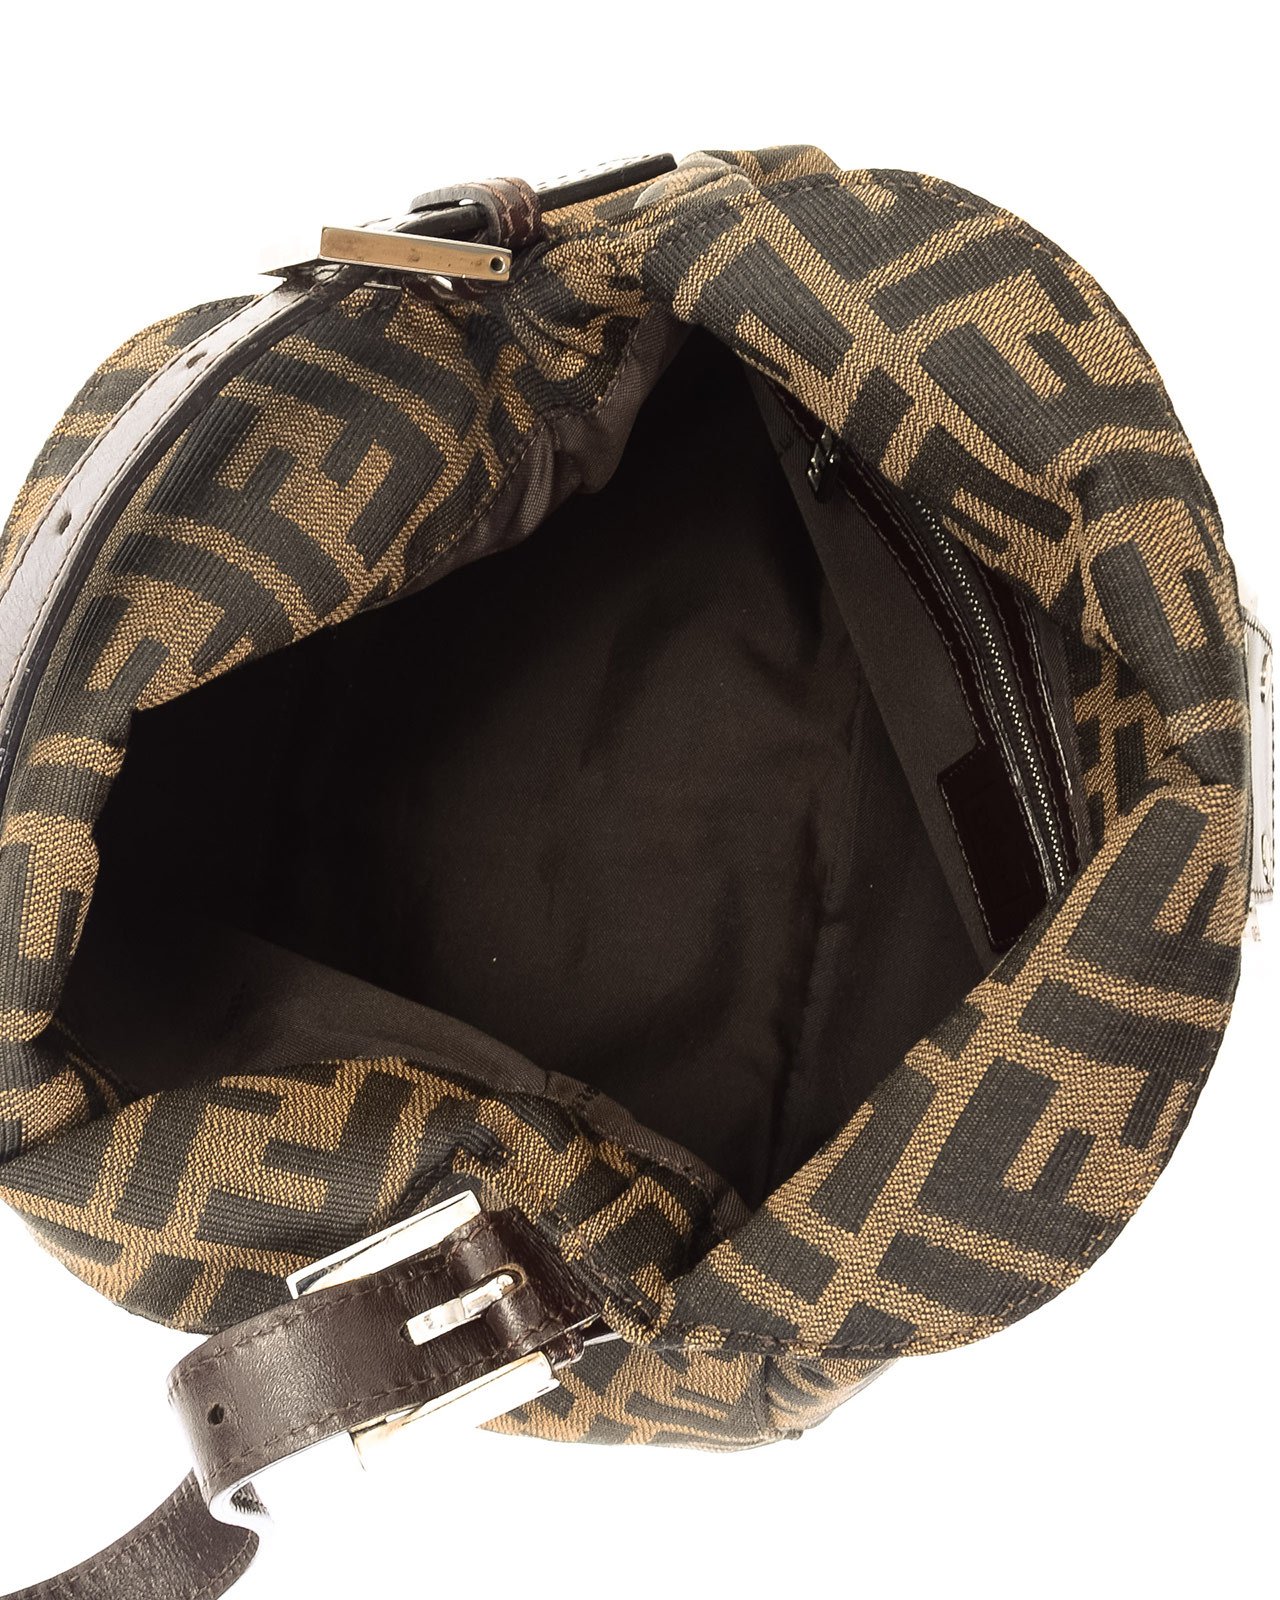 Fendi Monogram Shoulder Bag in Brown - Lyst